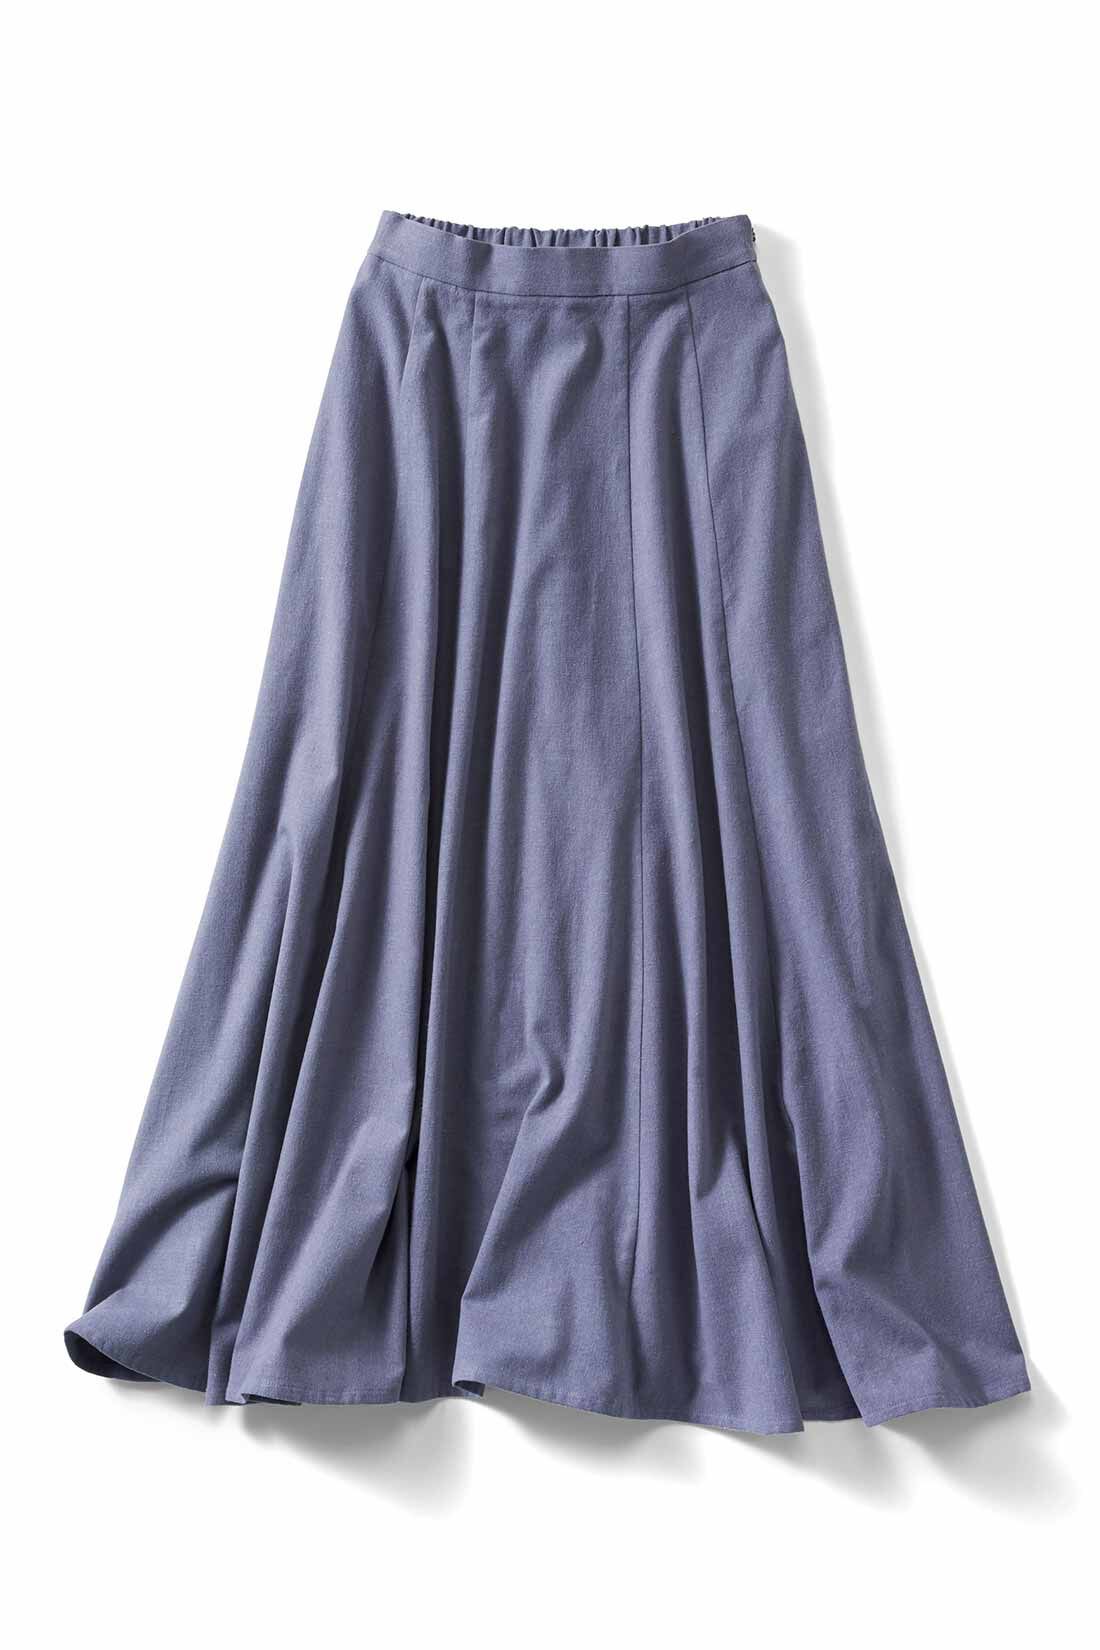 IEDIT[イディット]　アンティーク風起毛仕立てのコットンリネンマキシスカート〈グレージュ〉|ブルー